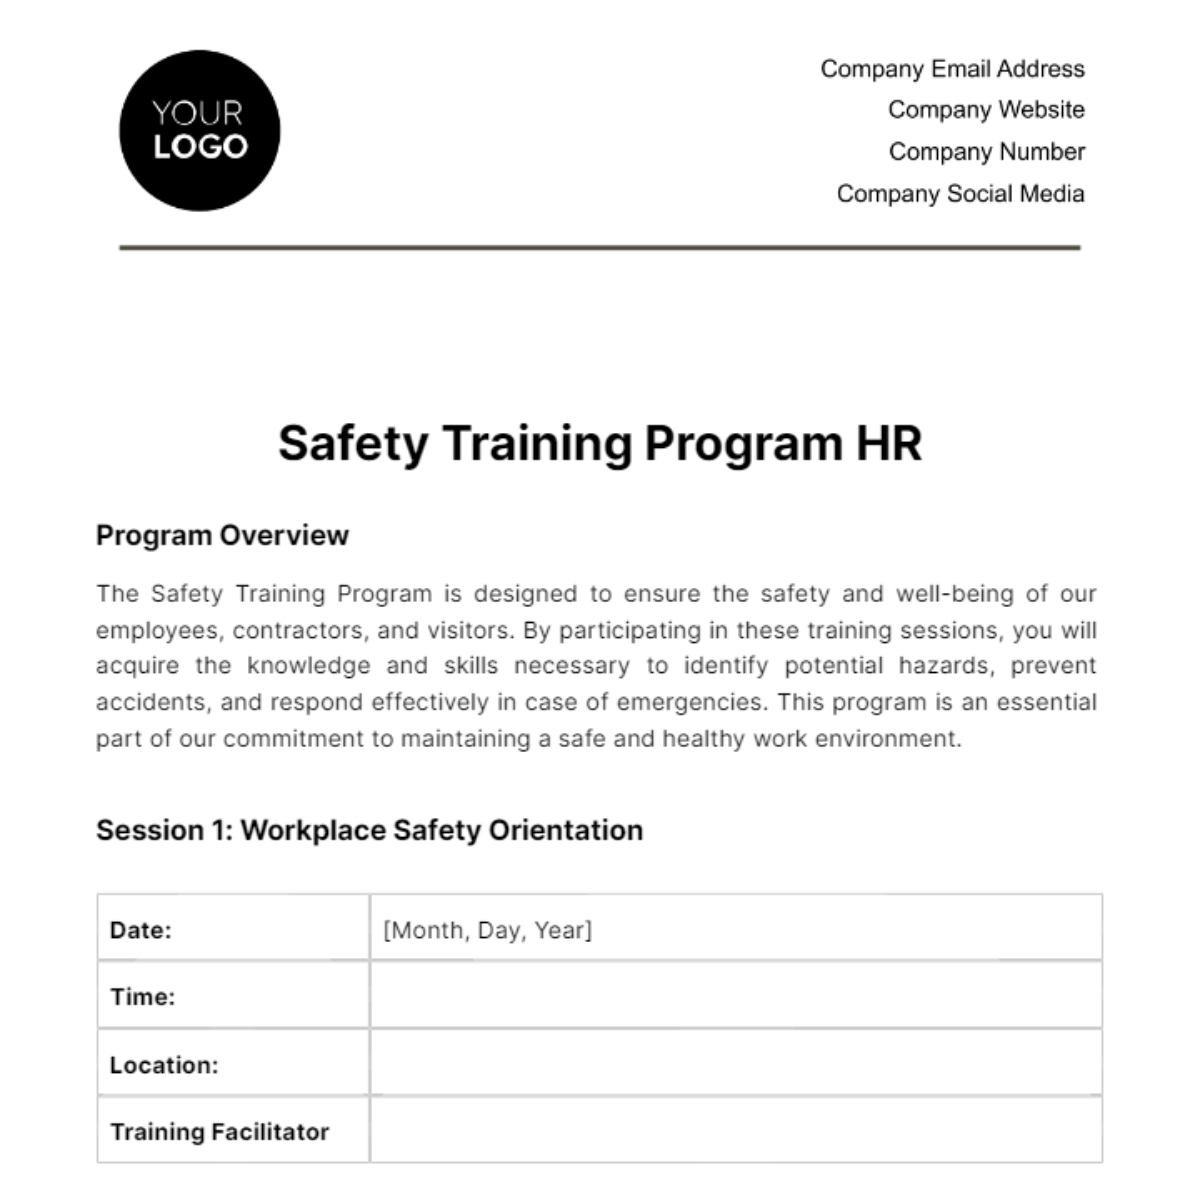 Safety Training Program HR Template